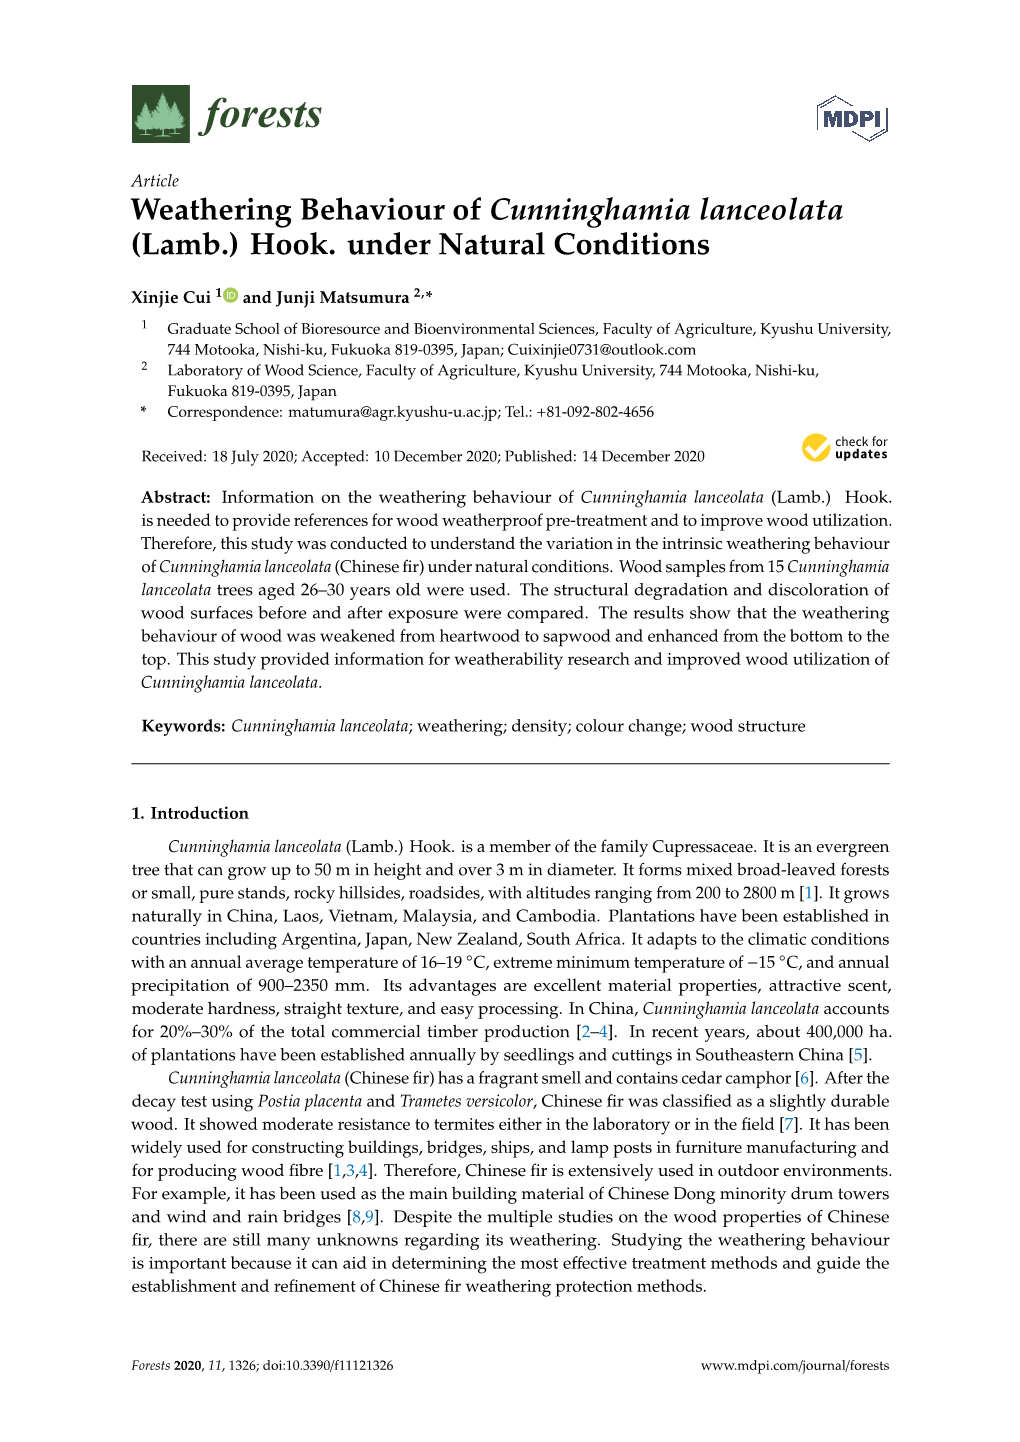 Weathering Behaviour of Cunninghamia Lanceolata (Lamb.) Hook